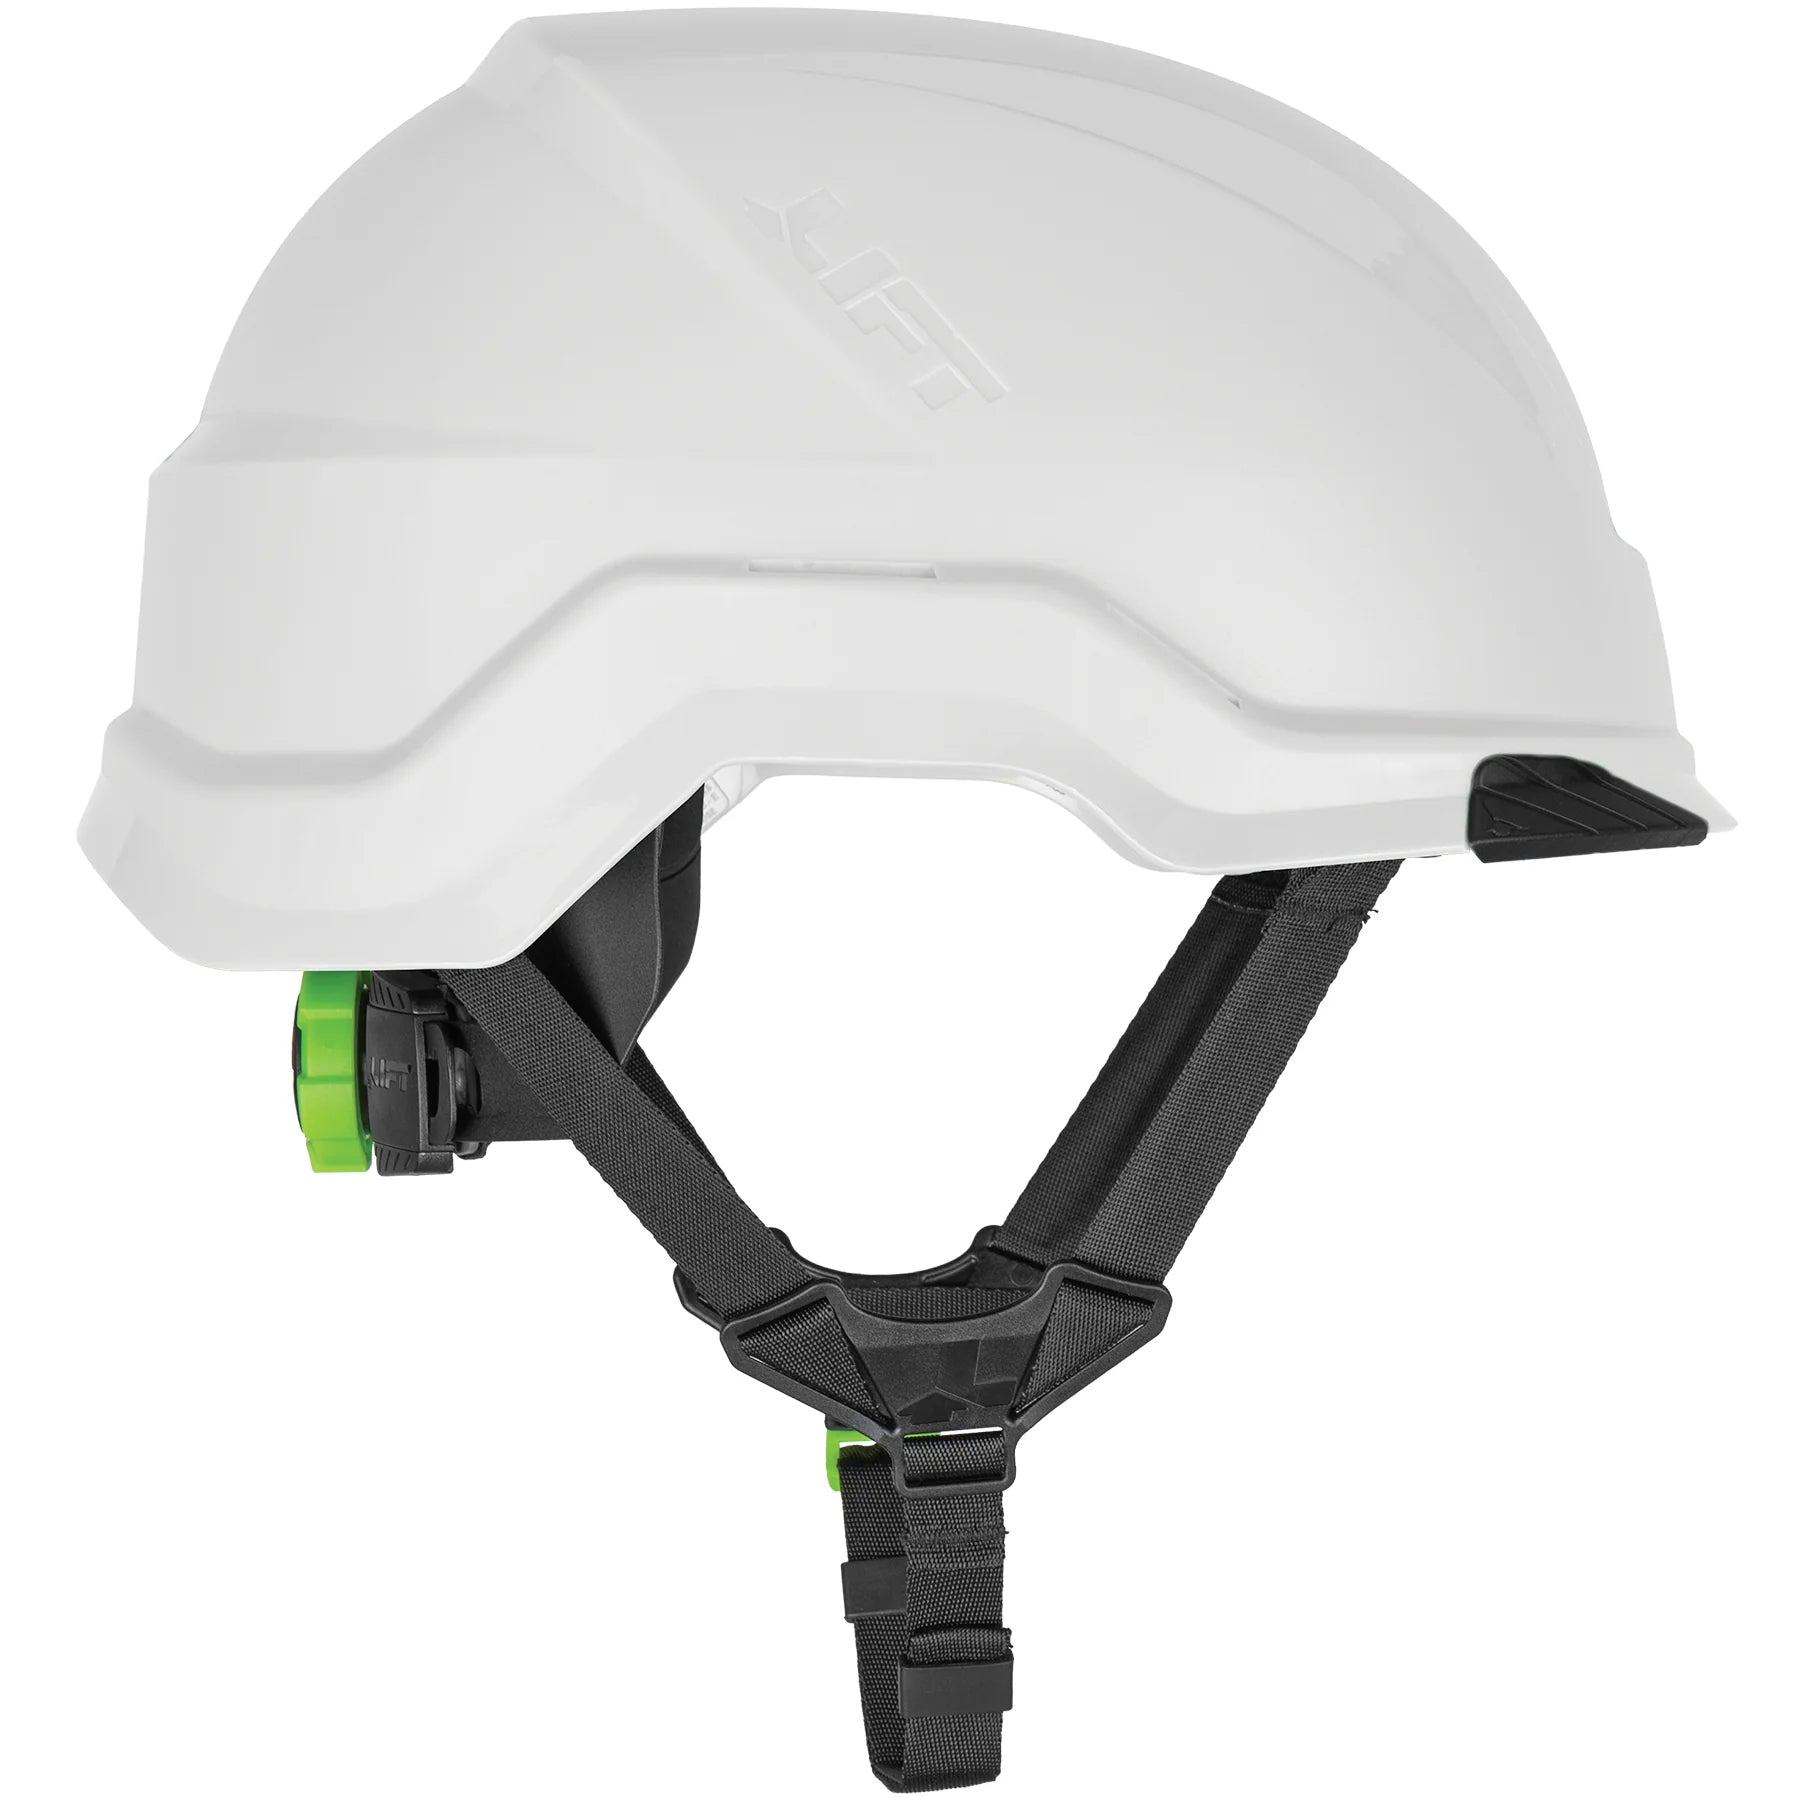 Plak opnieuw Ontwaken volgens Lift RADIX Safety Helmet, Non Vented, Type 2, Class E – Safewerks